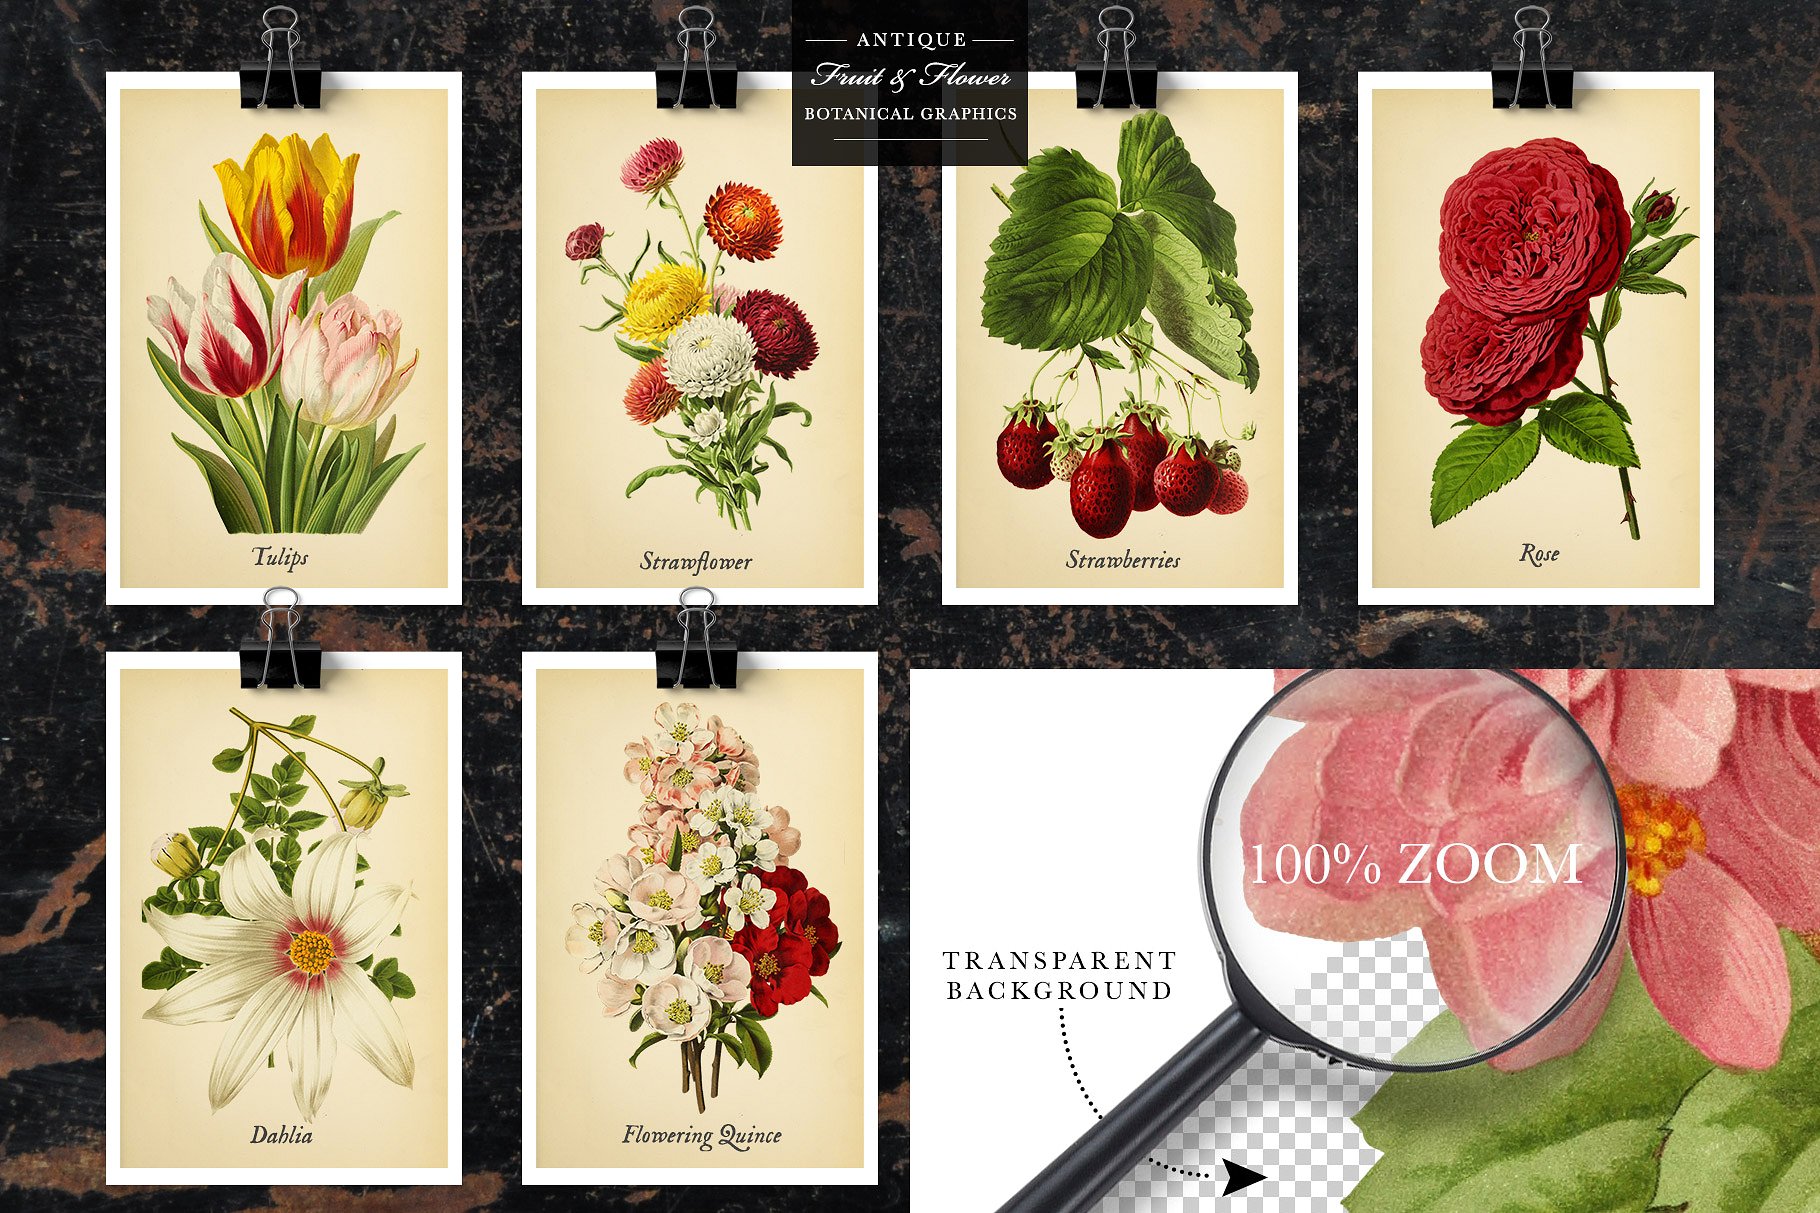 复古风格水果&花卉剪贴画素材 Antique Fruit & Flowers Graphics插图(9)